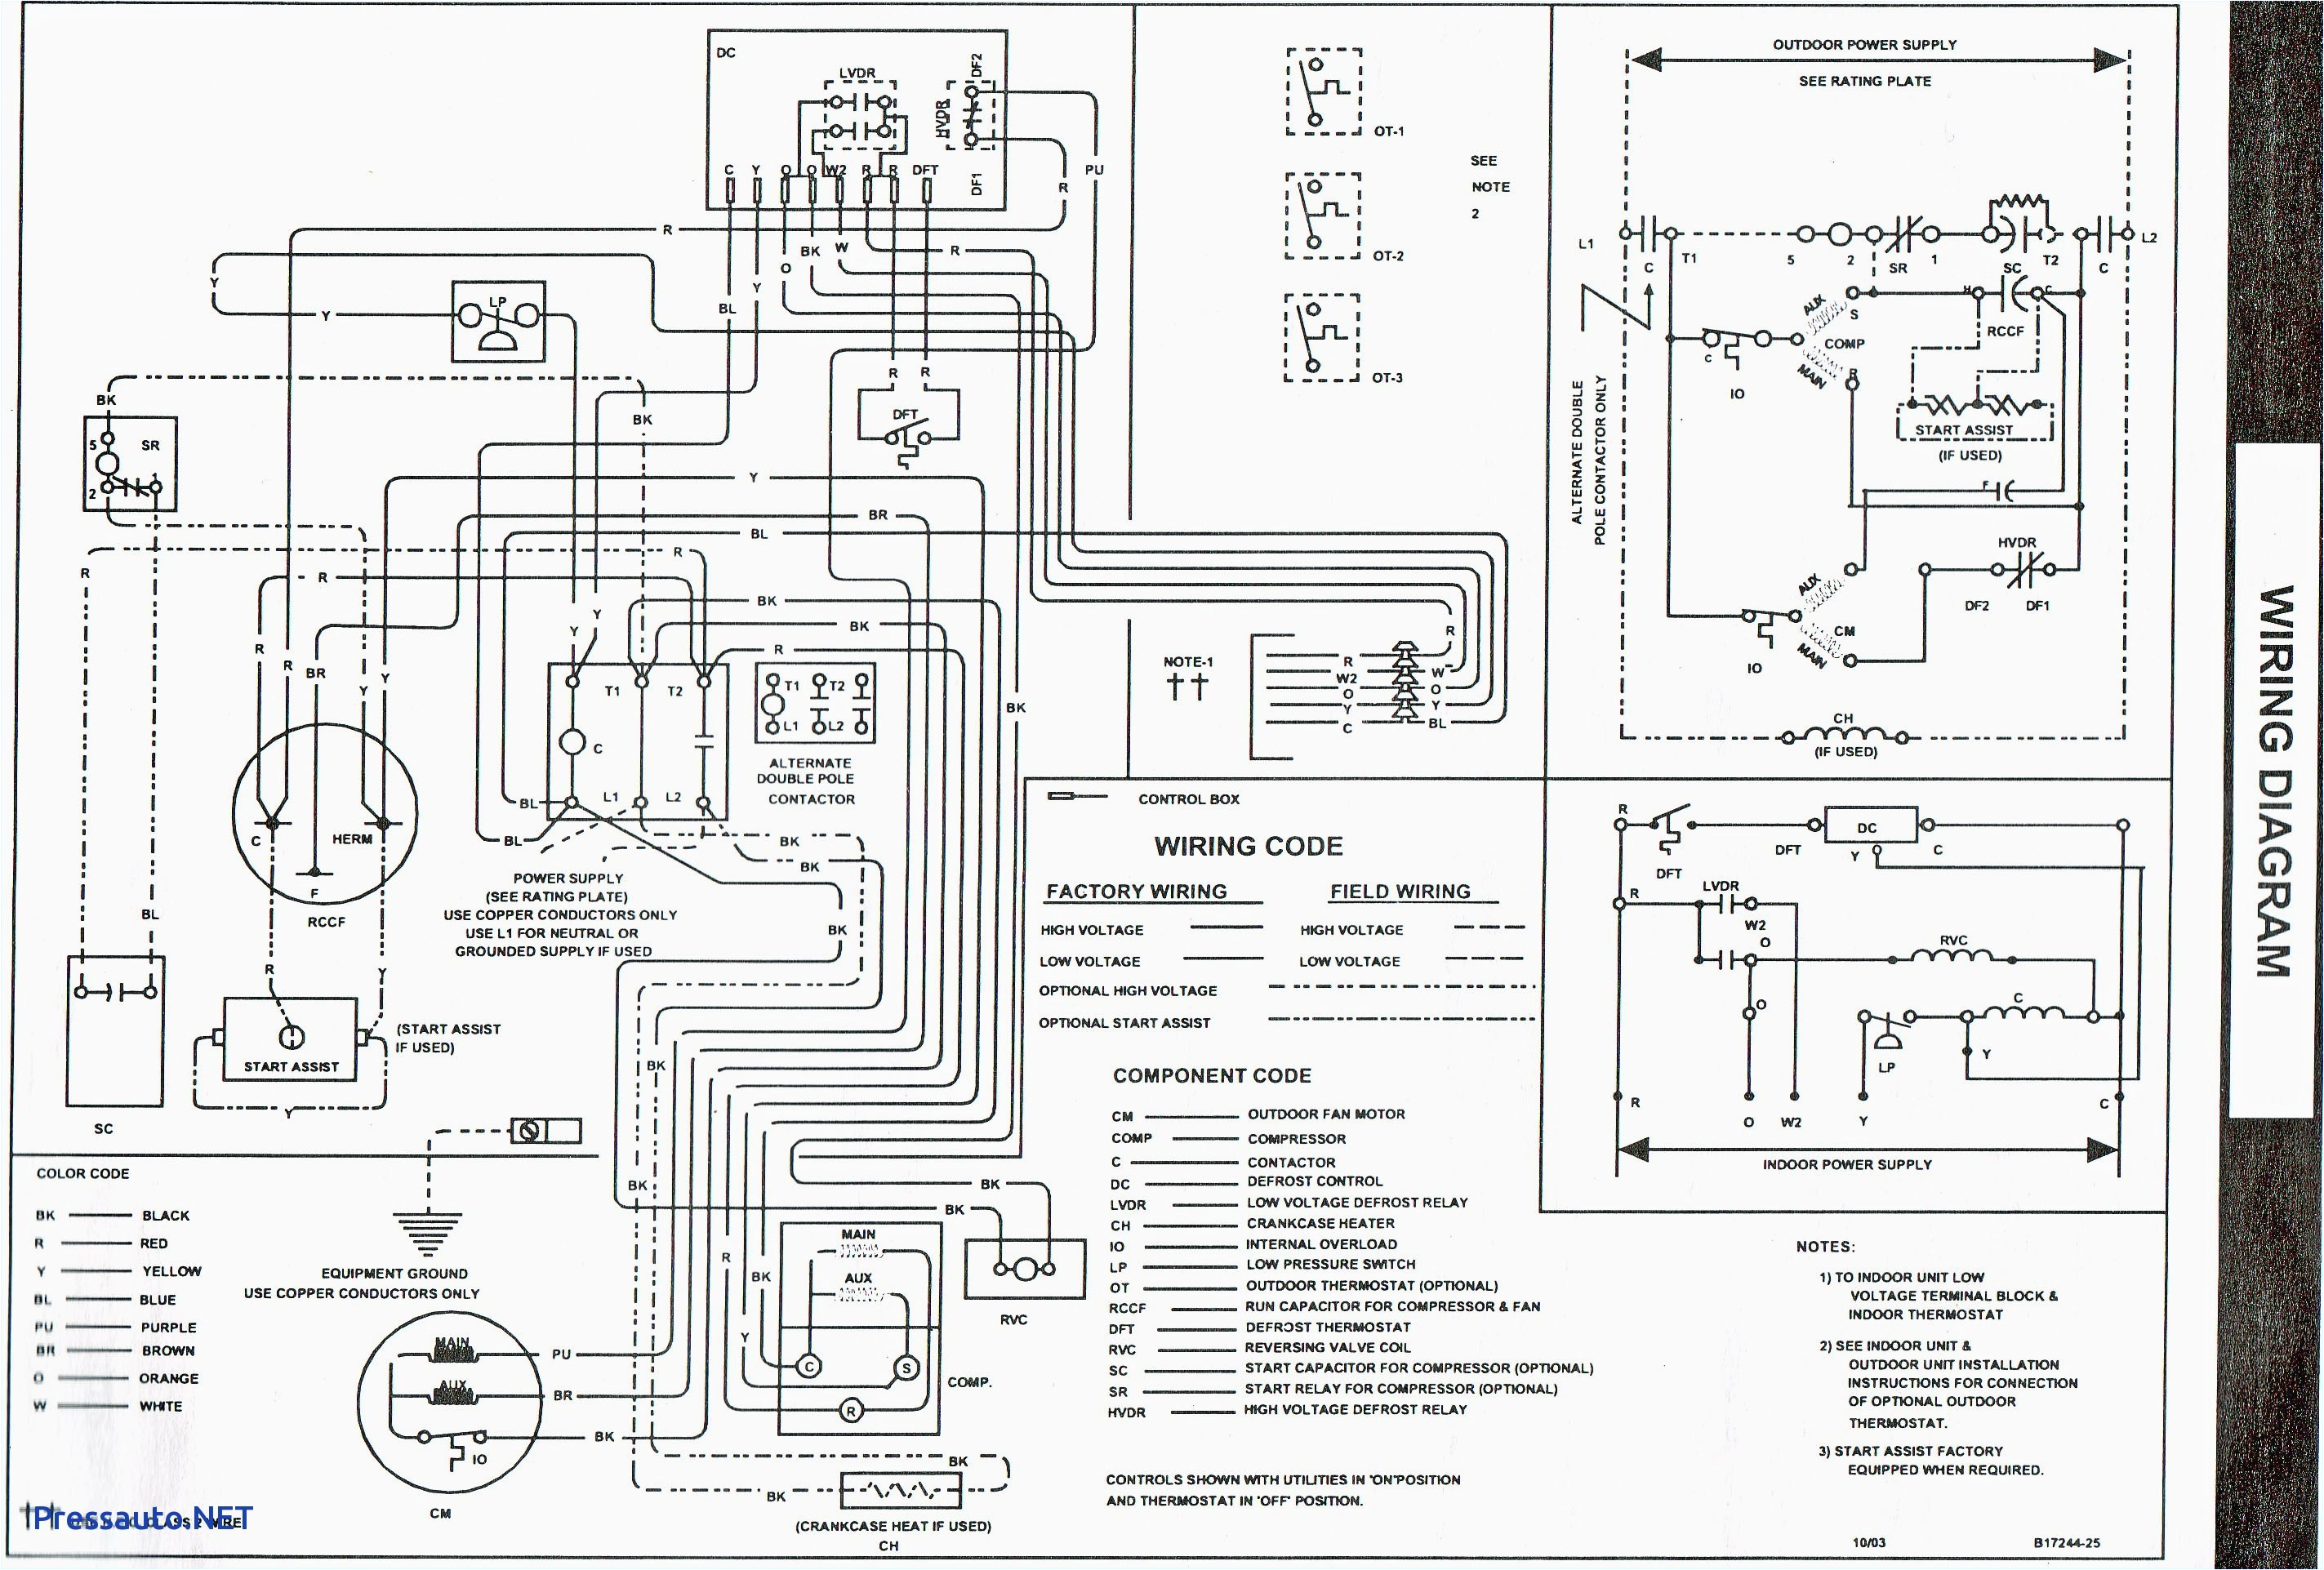 model wiring ruud schematic schematic rrgg05n24jkr search wiring mix model wiring ruud schematic rrgg05n24jkr wiring diagram